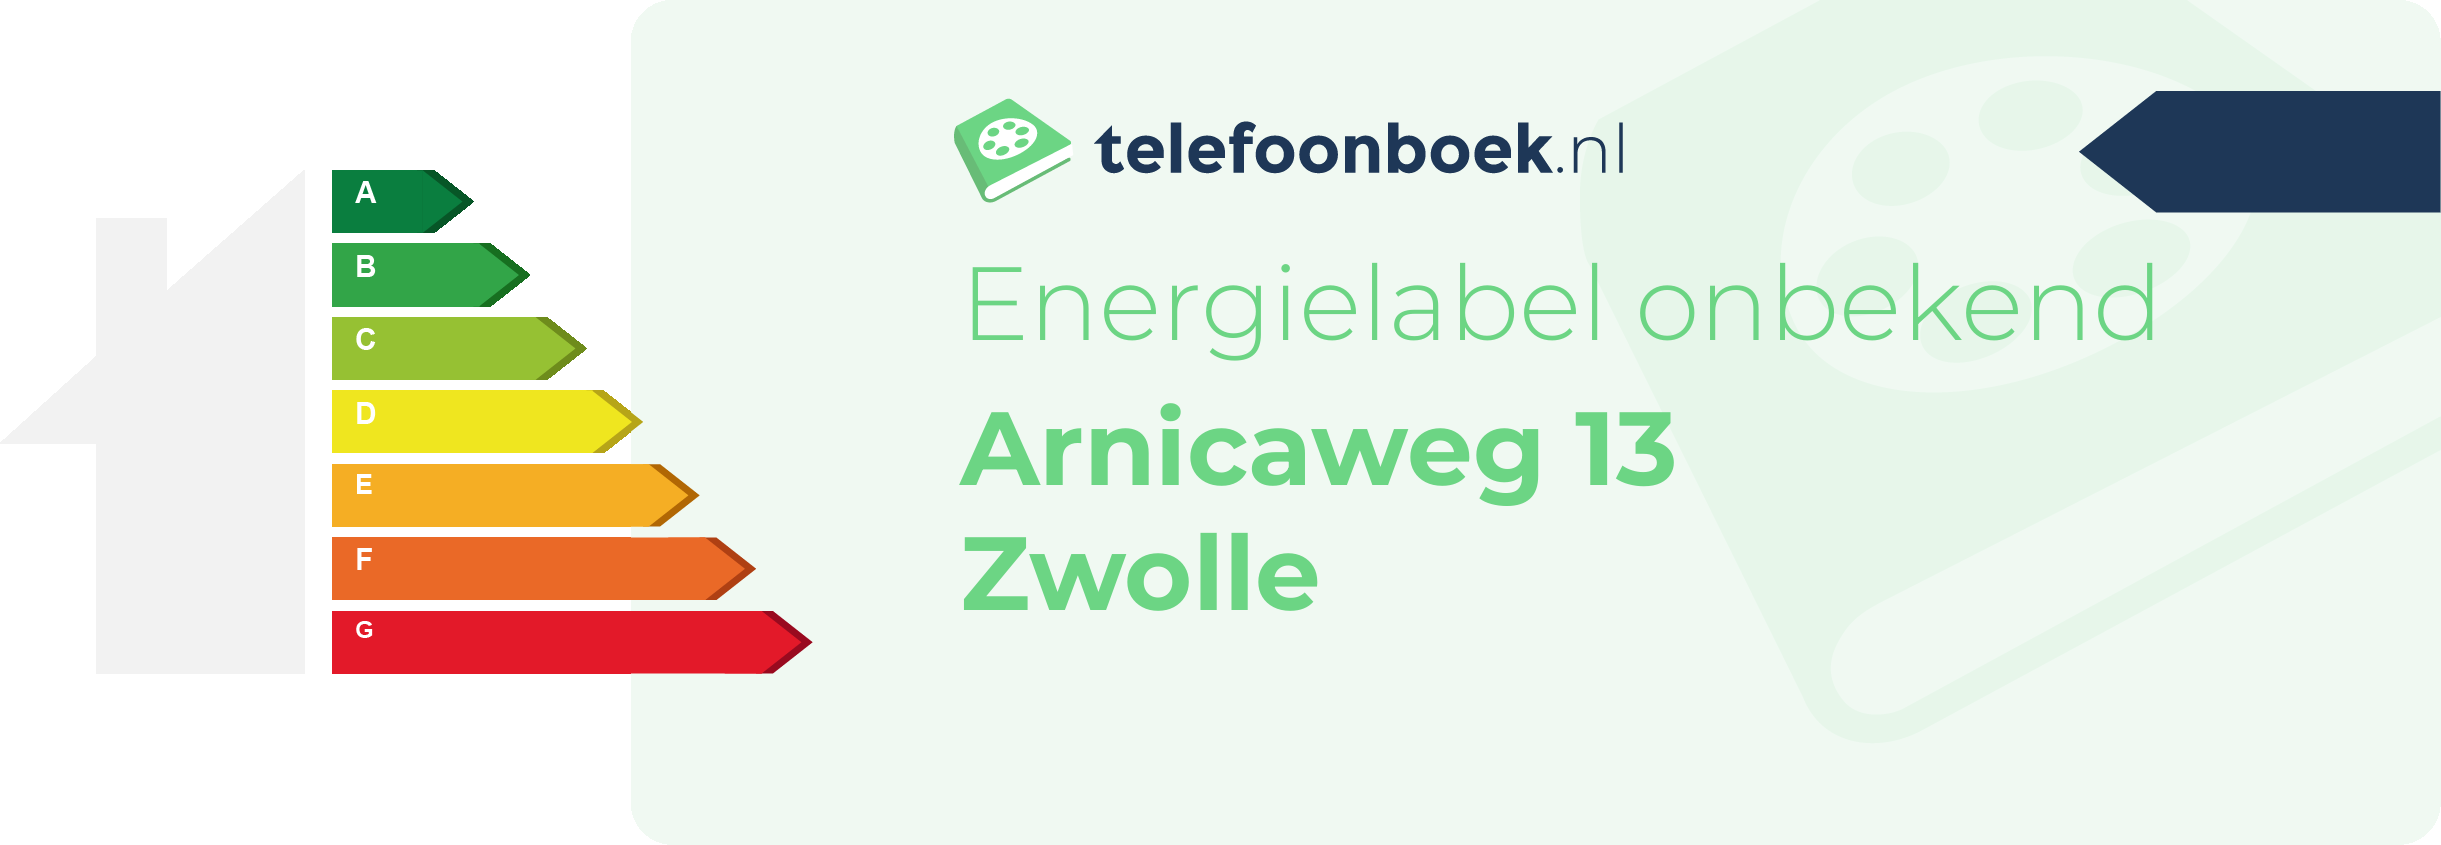 Energielabel Arnicaweg 13 Zwolle